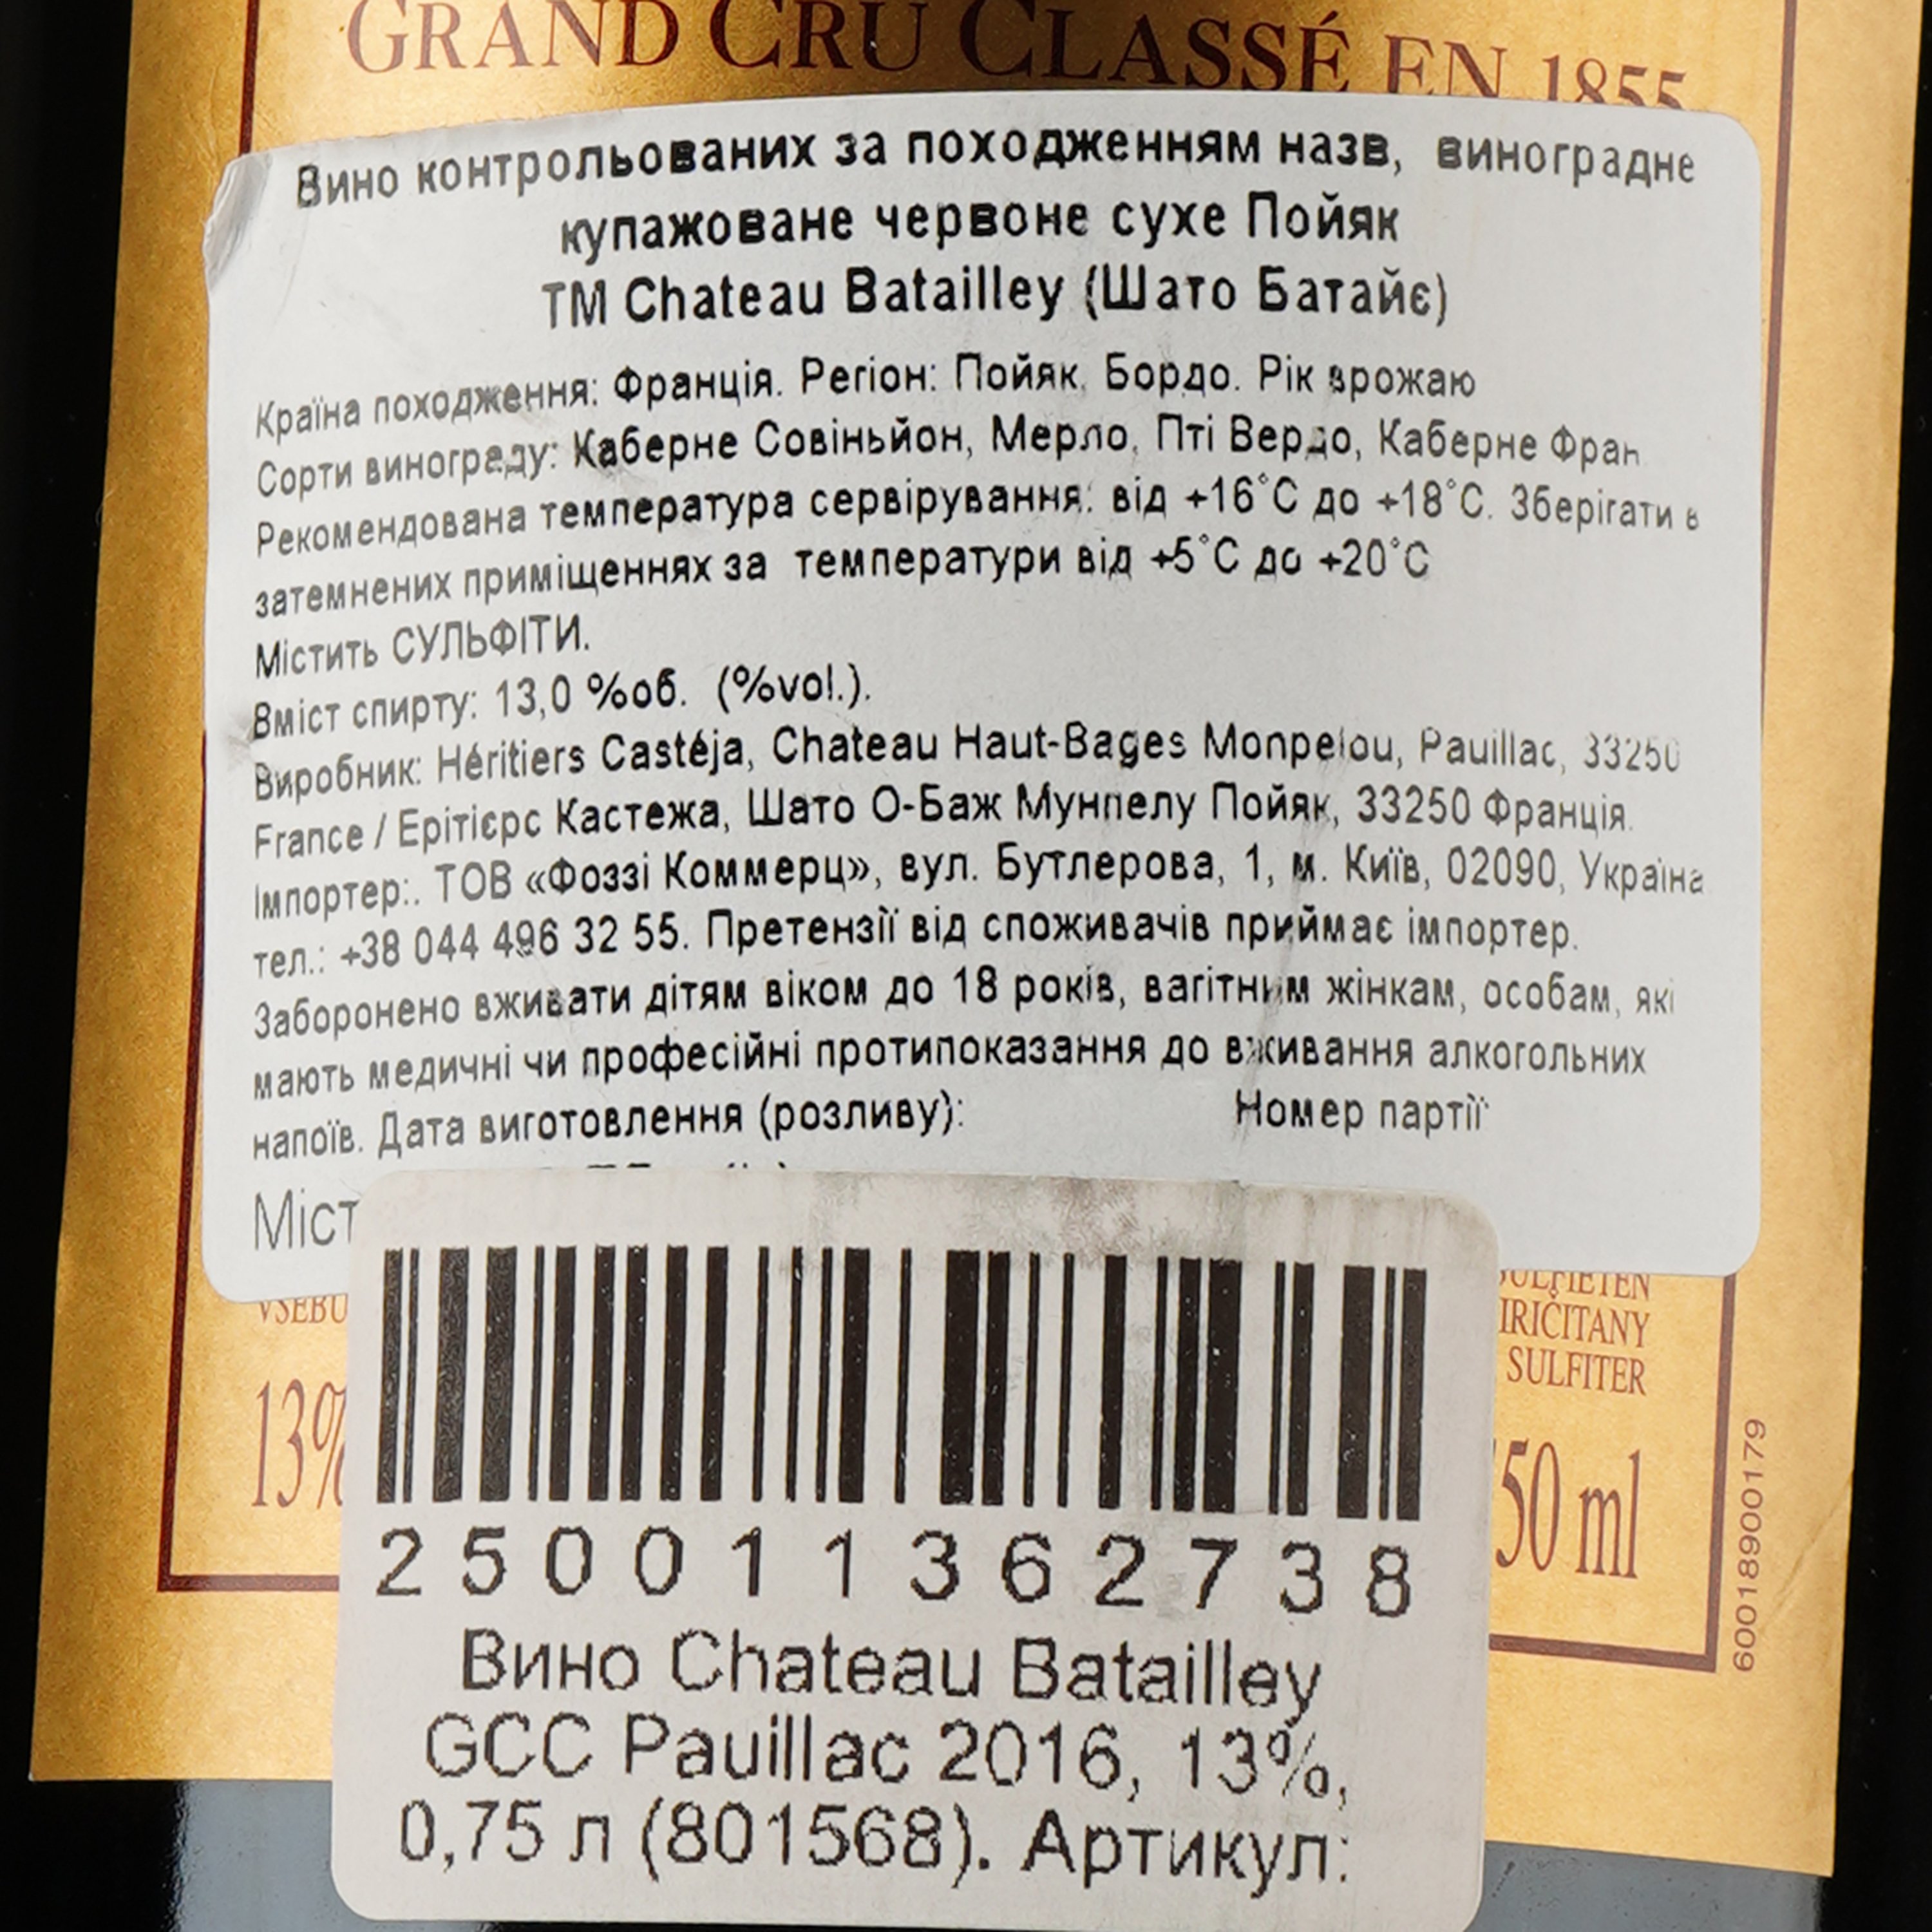 Вино Chateau Batailley GCC Pauillac 2016, 13%, 0,75 л (801568) - фото 3